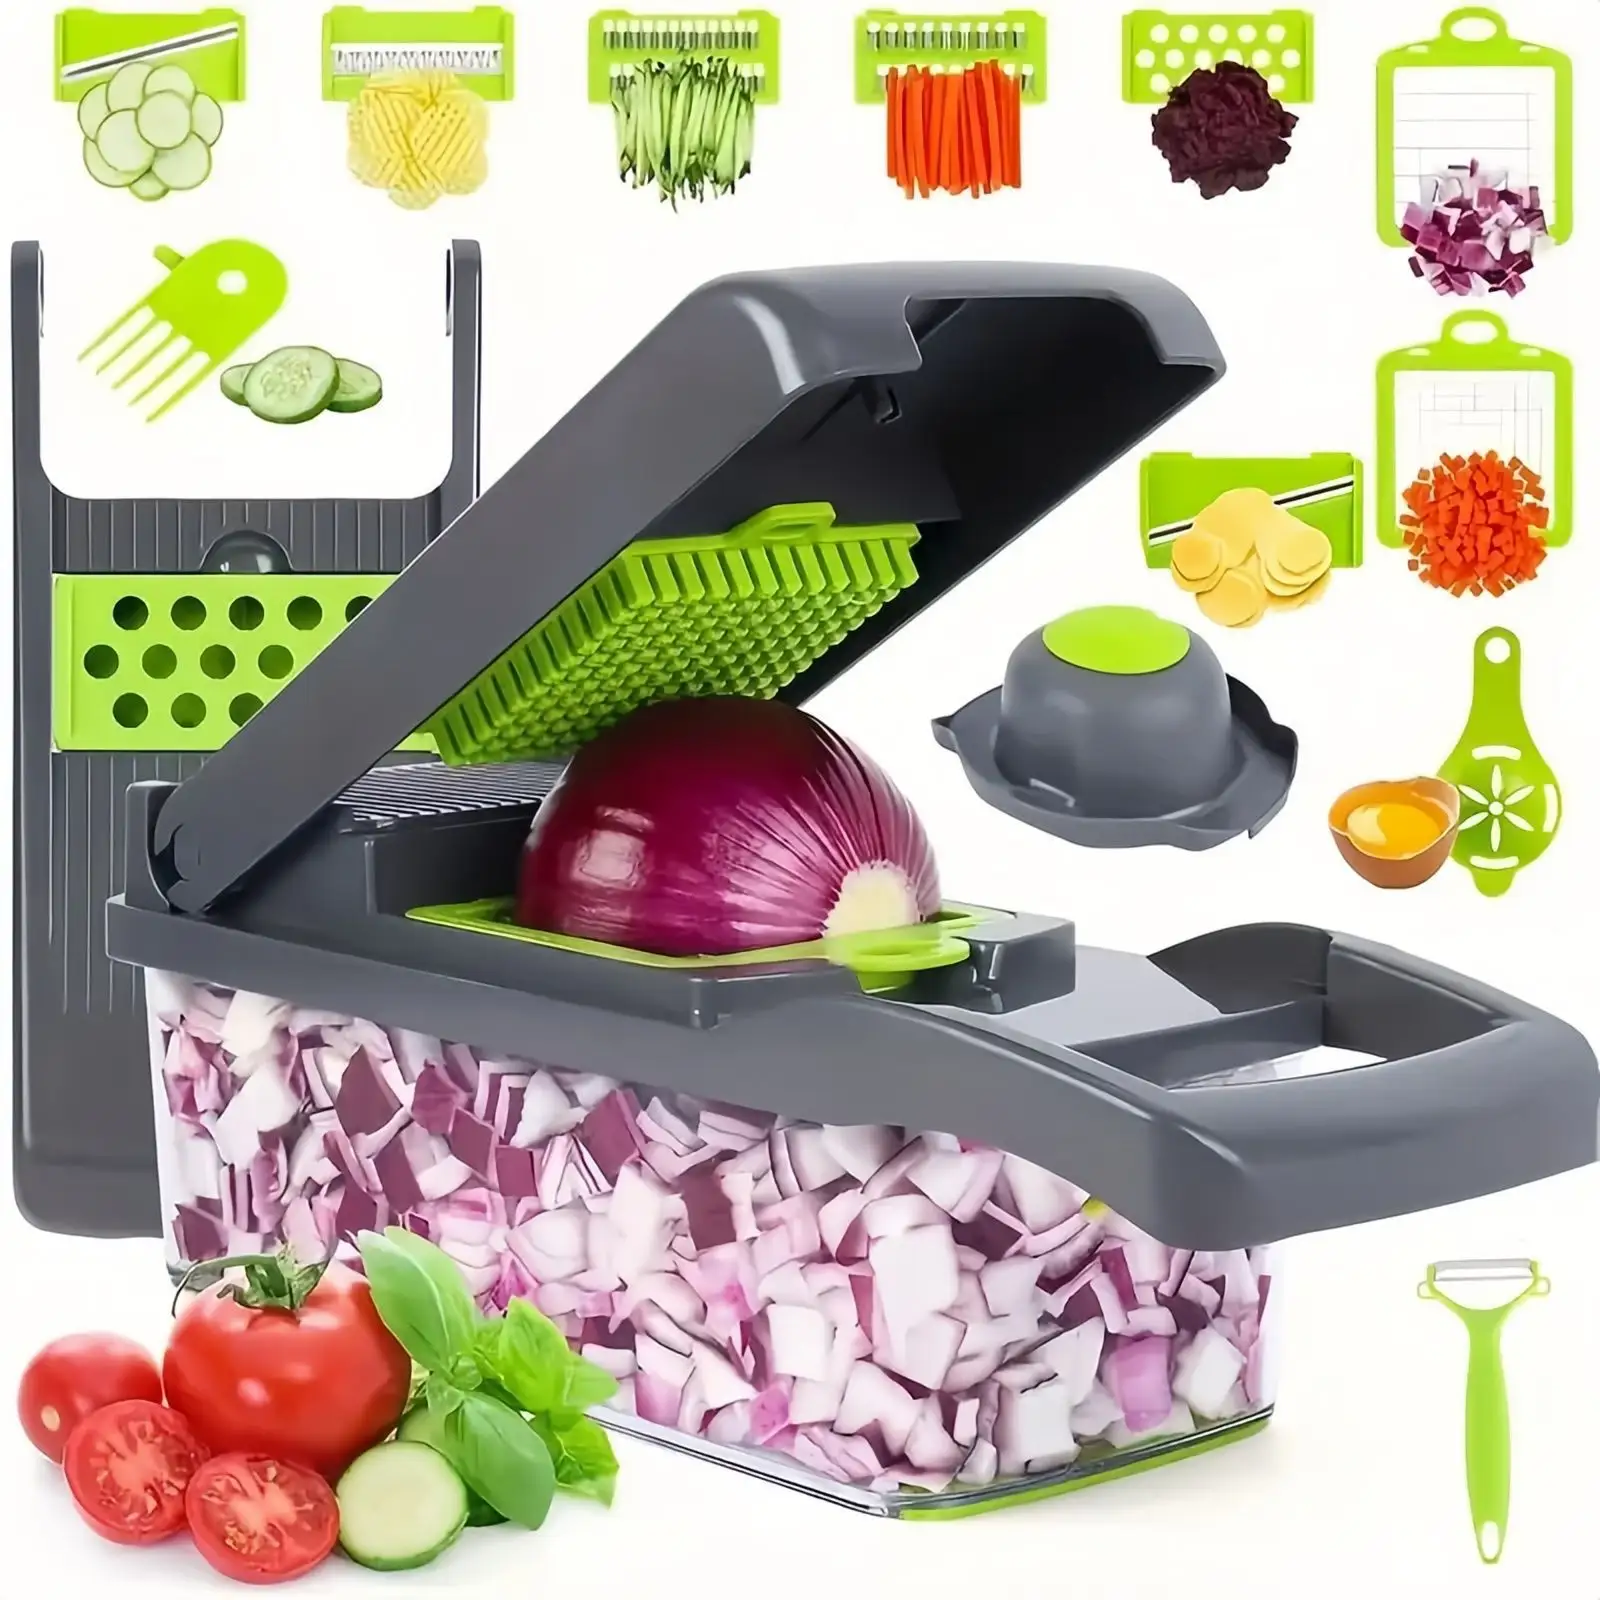 14 in 1 and 16 in 1 Veggie Food Chopper Mandoline Slicer Onion Cutter Peeler Vegetable Vegetable Slicer with Gloves